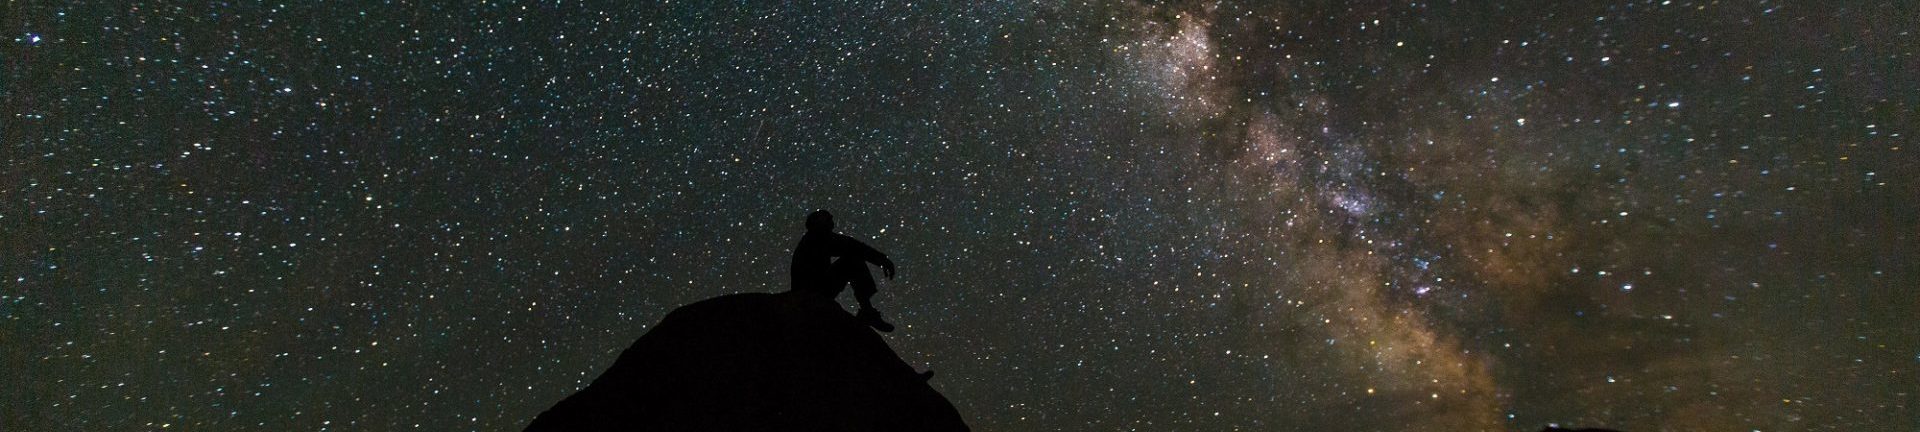 Milky Way - The ABC of Space blog, a conversation between Stuart Delves and Professor James Dunlop